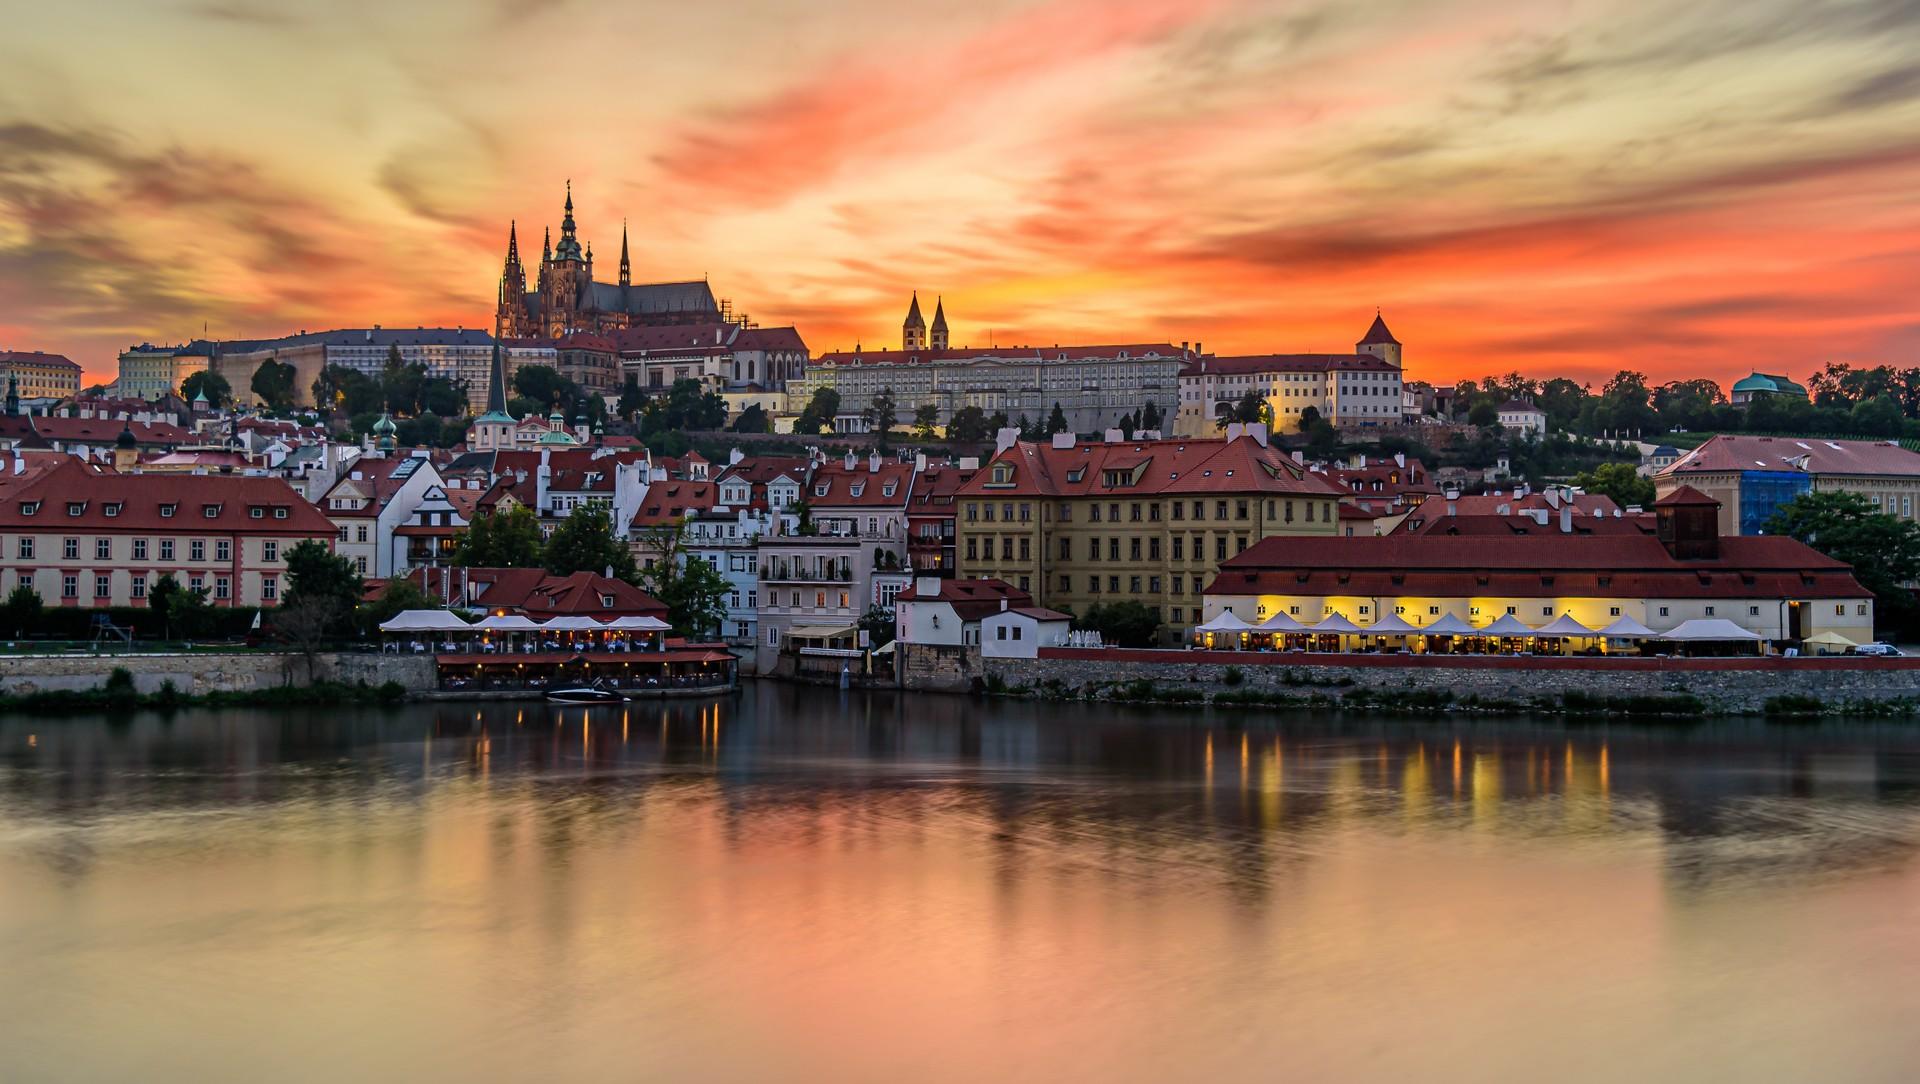 Architecture in Prague at dawn